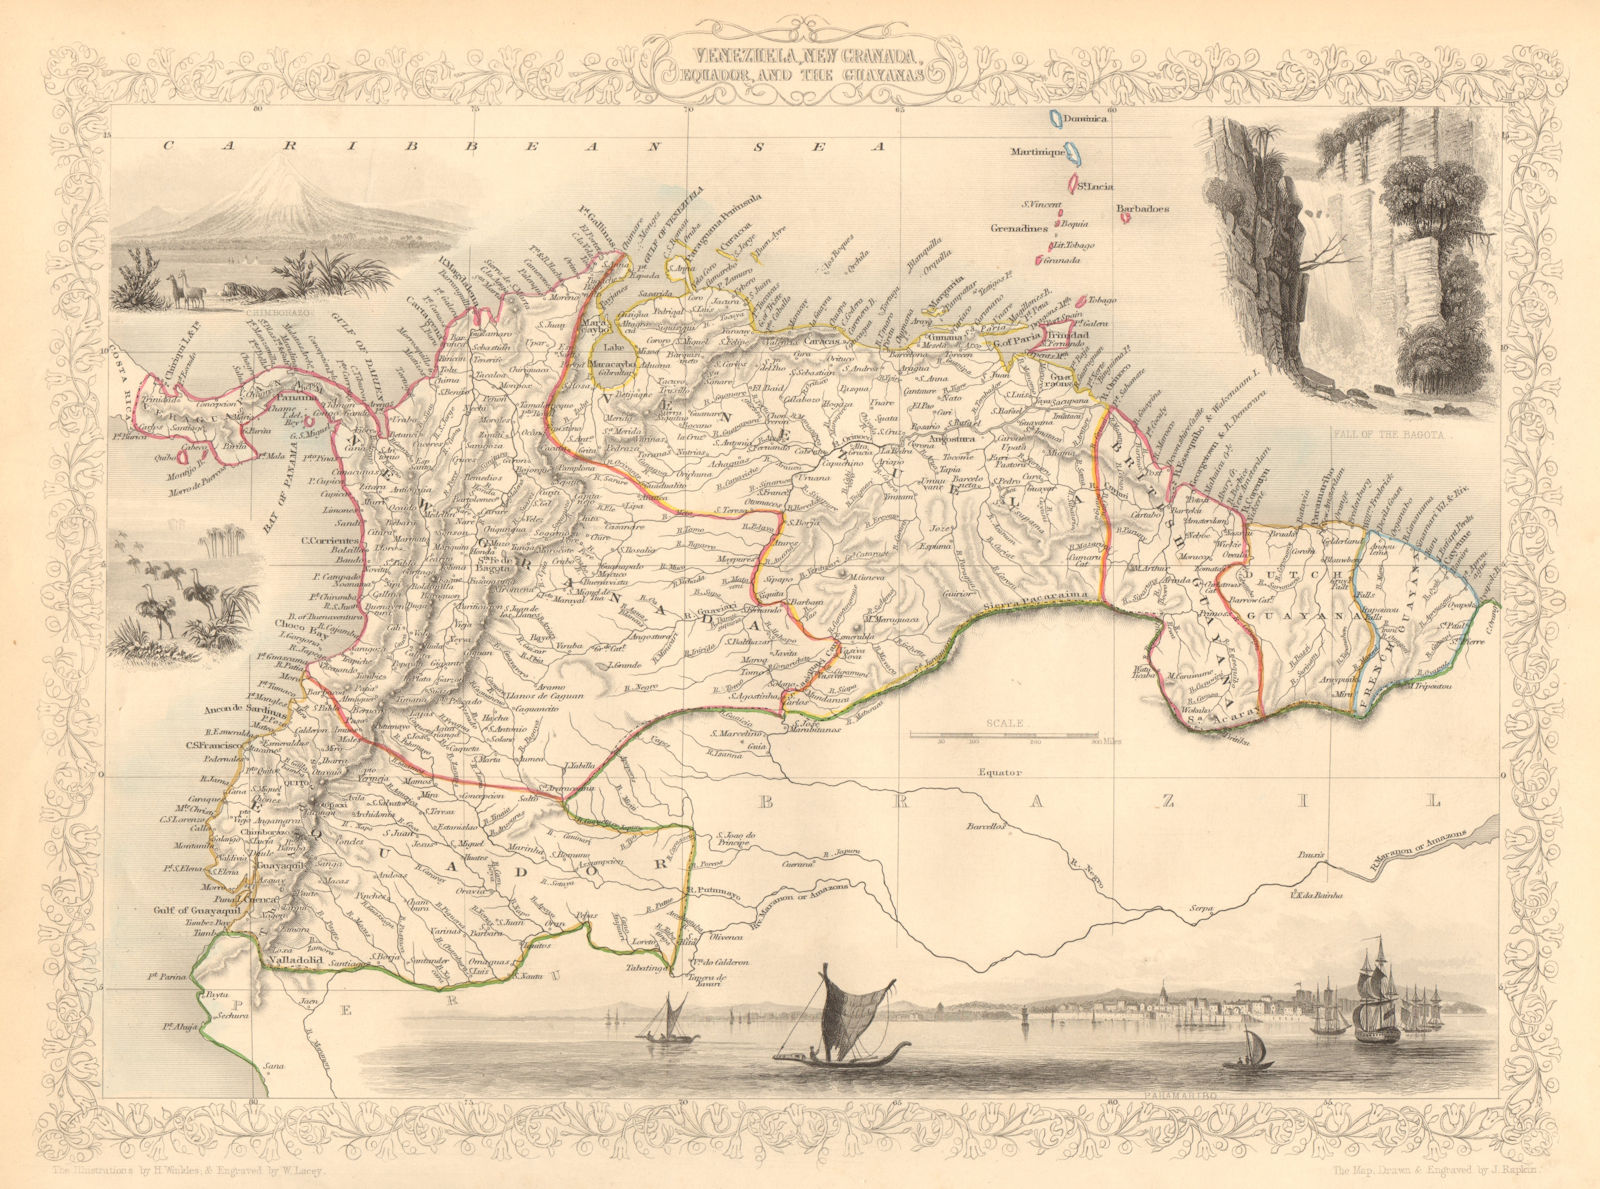 VENEZUELA, NEW GRANADA, EQUADOR & THE GUYANAS. Ecuador. RAPKIN/TALLIS 1851 map